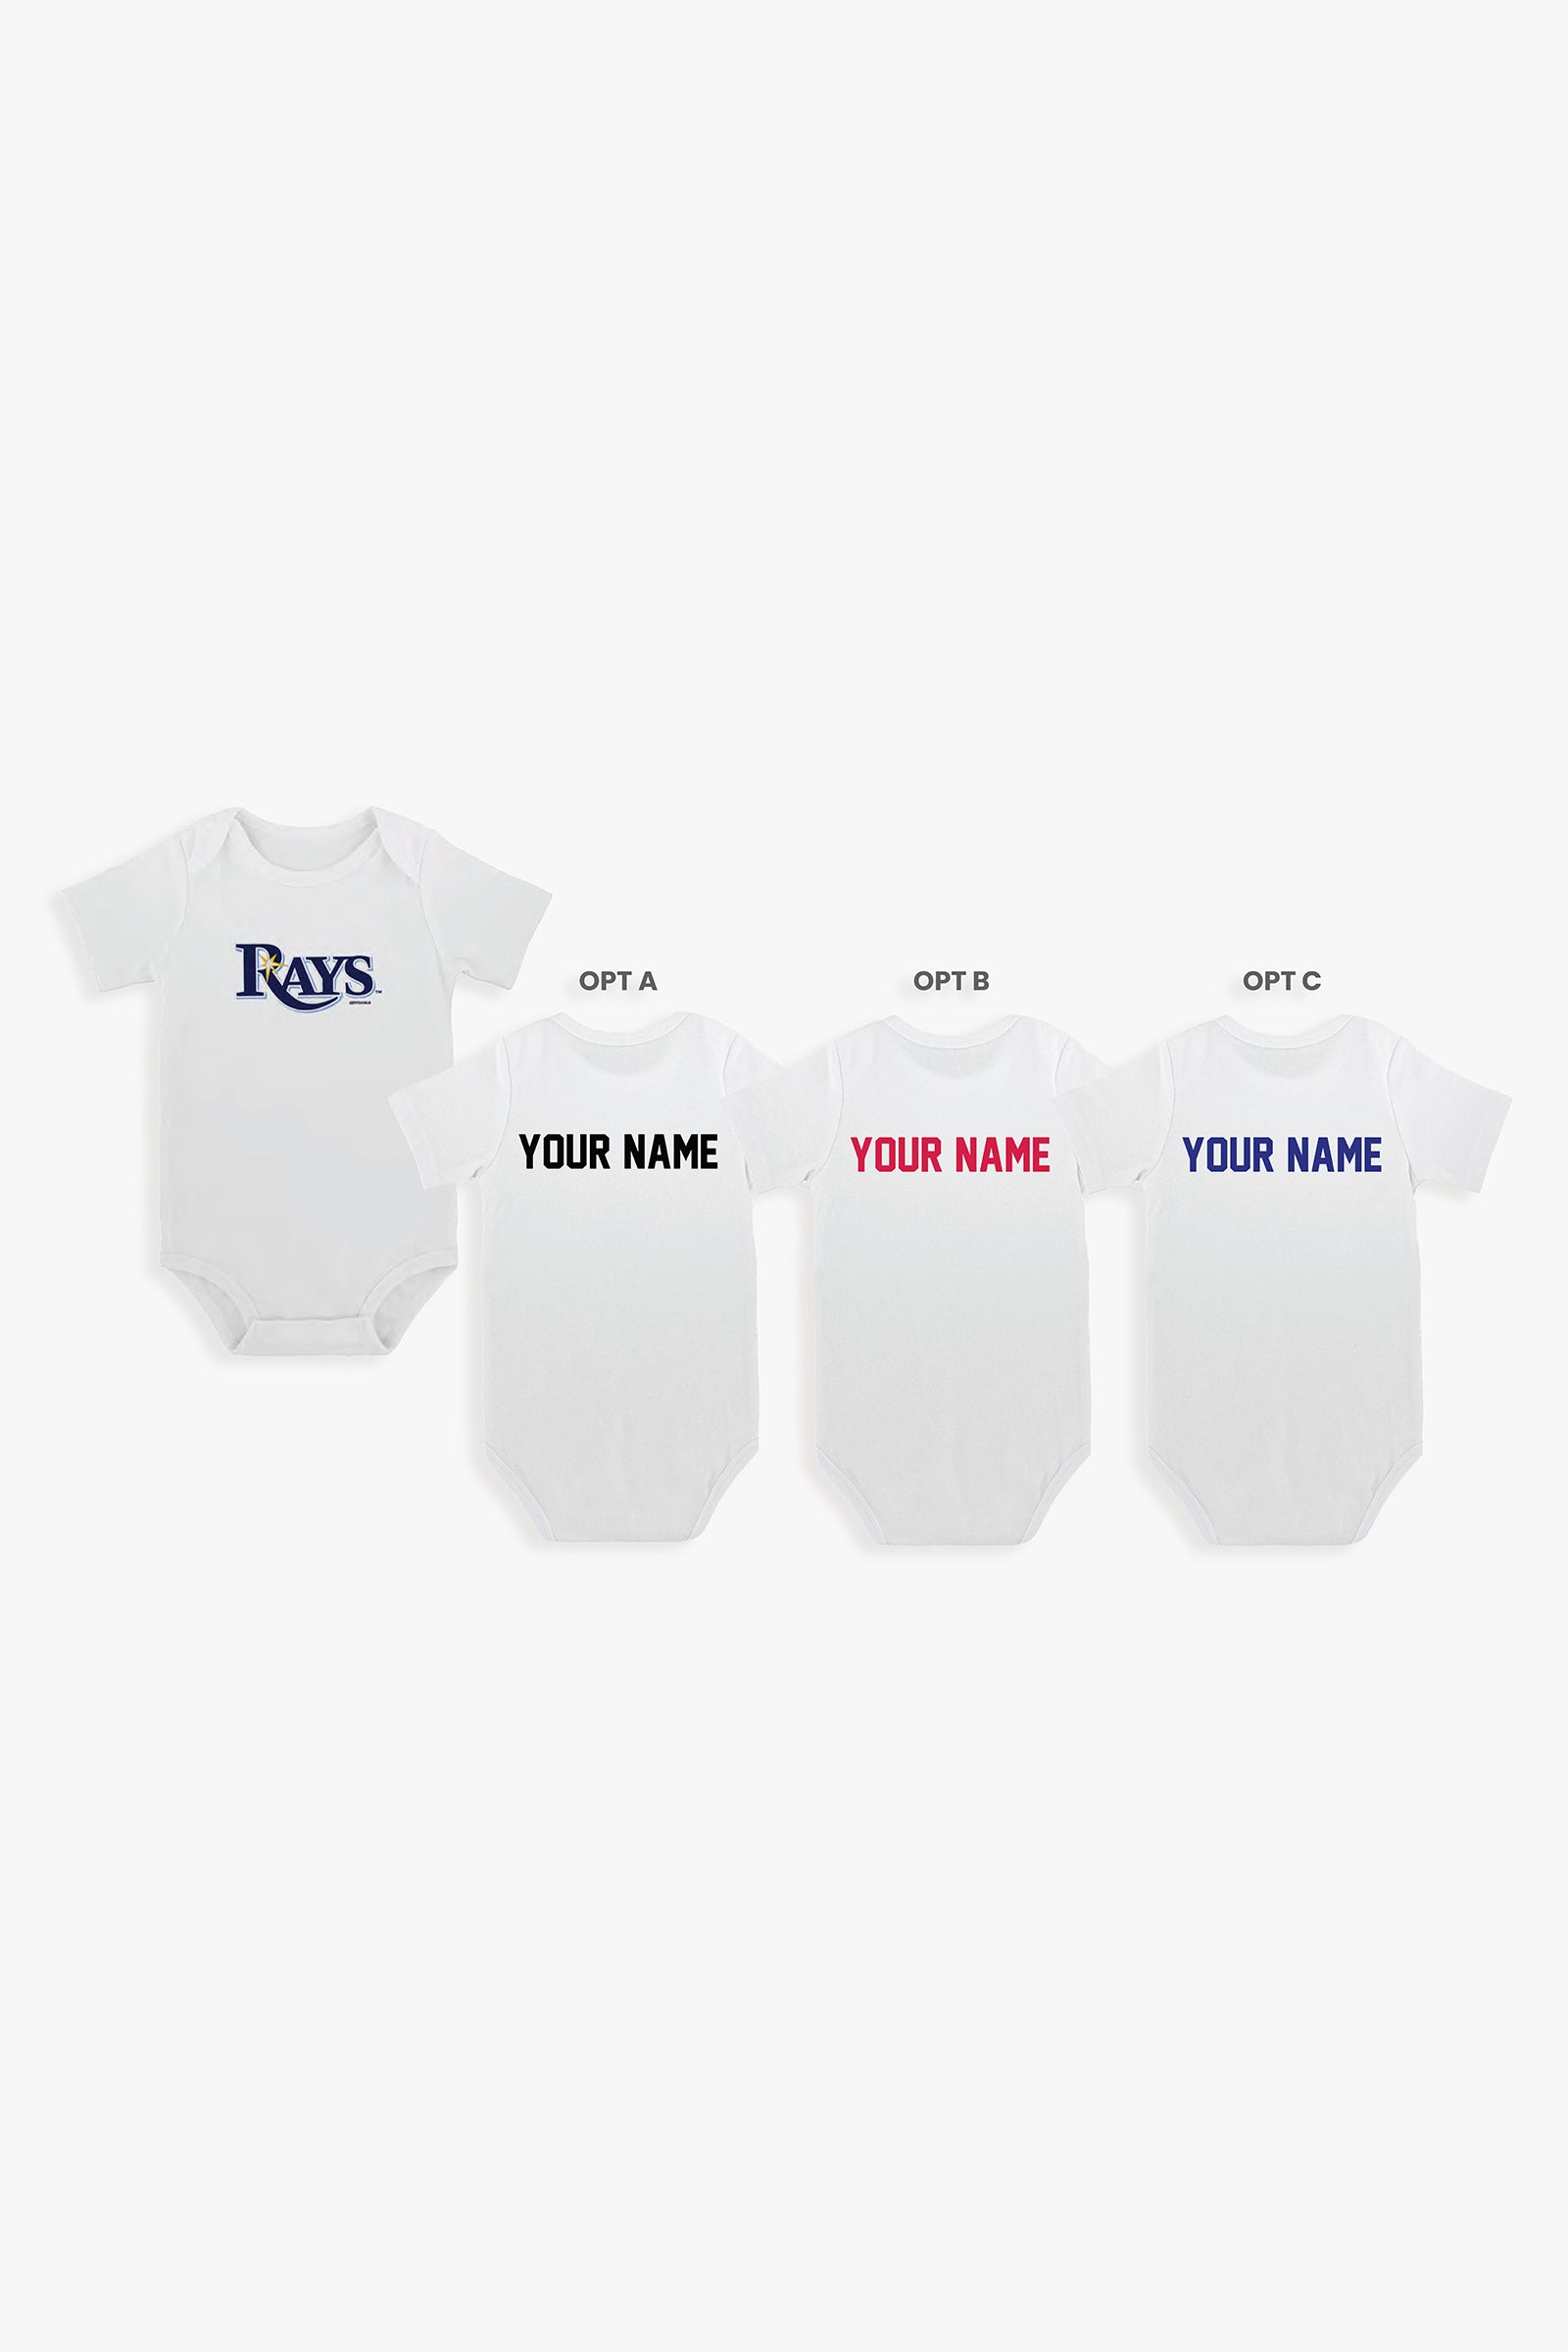 Gertex Customizable MLB Baby Bodysuit in White (9-12 Months)